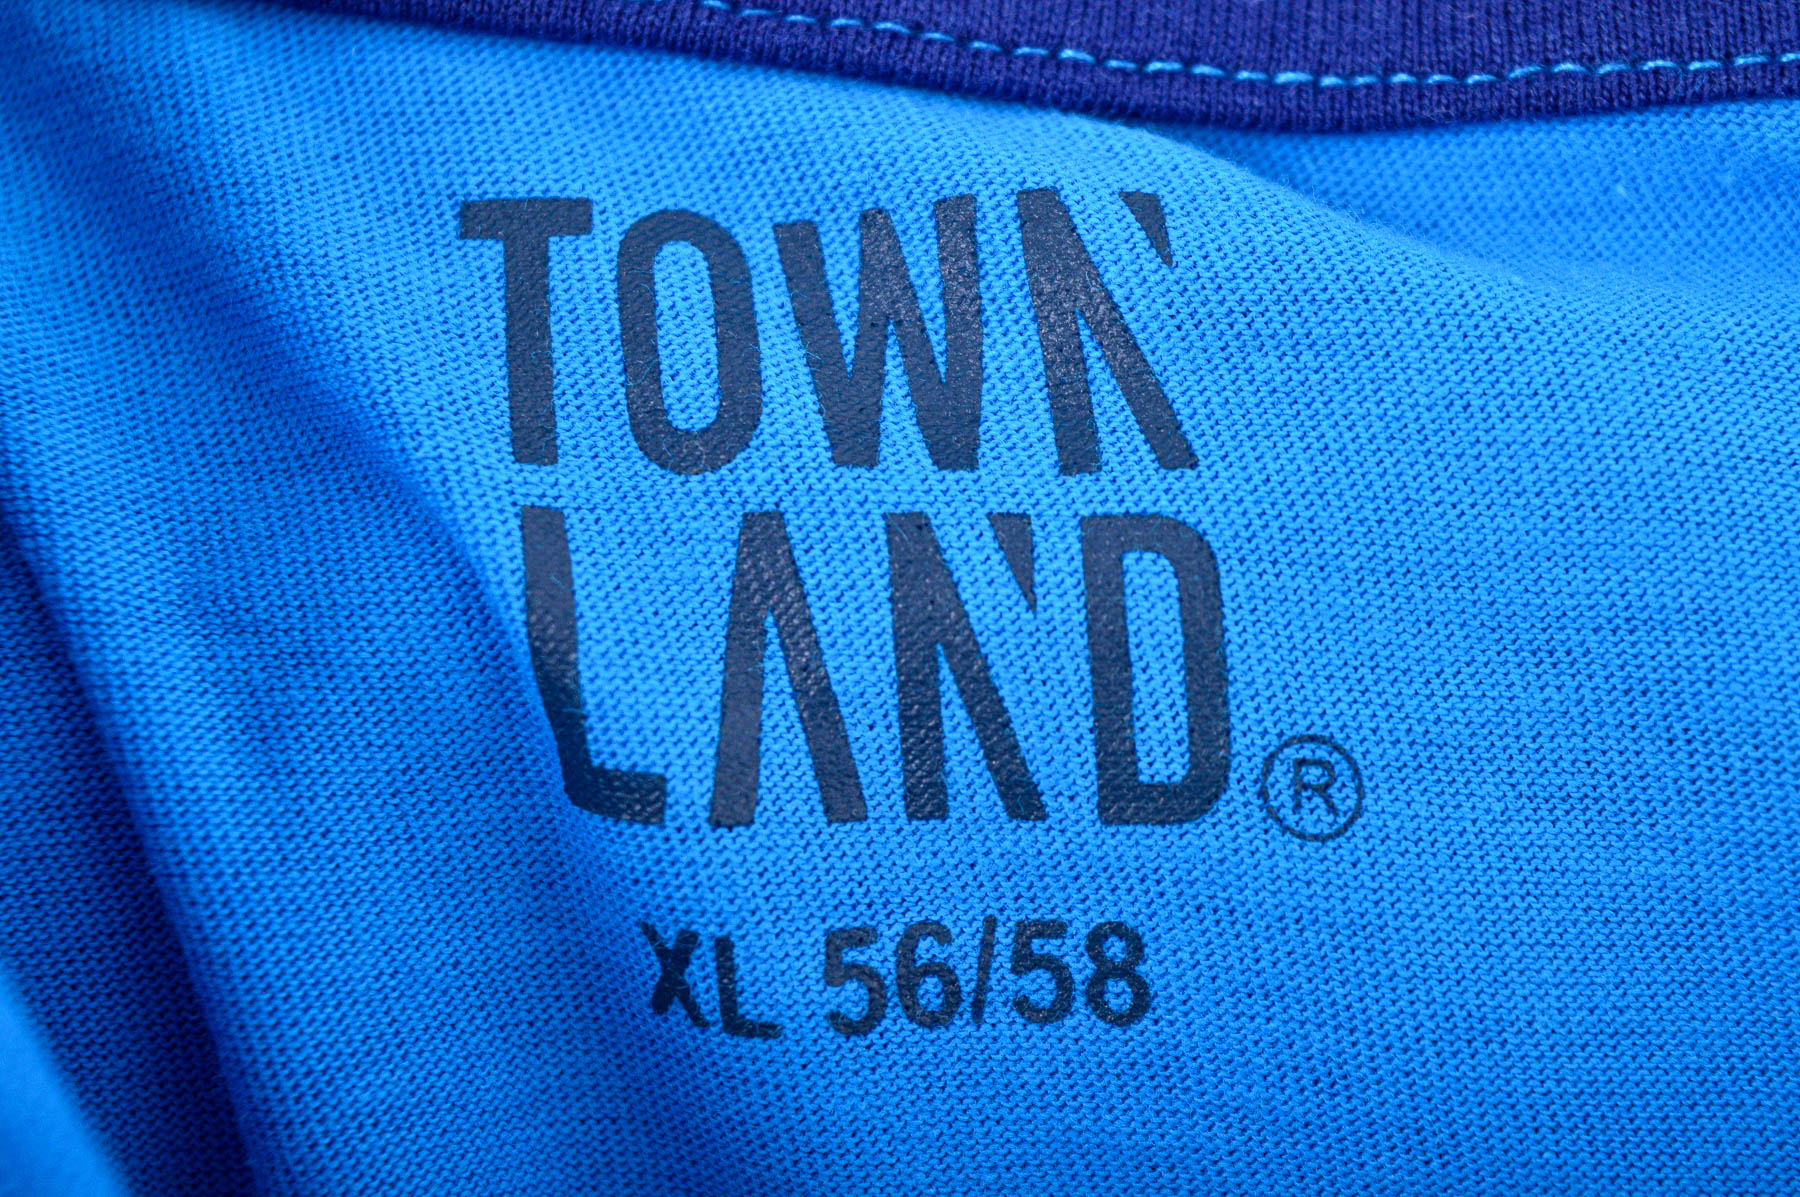 Men's T-shirt - Town land - 2